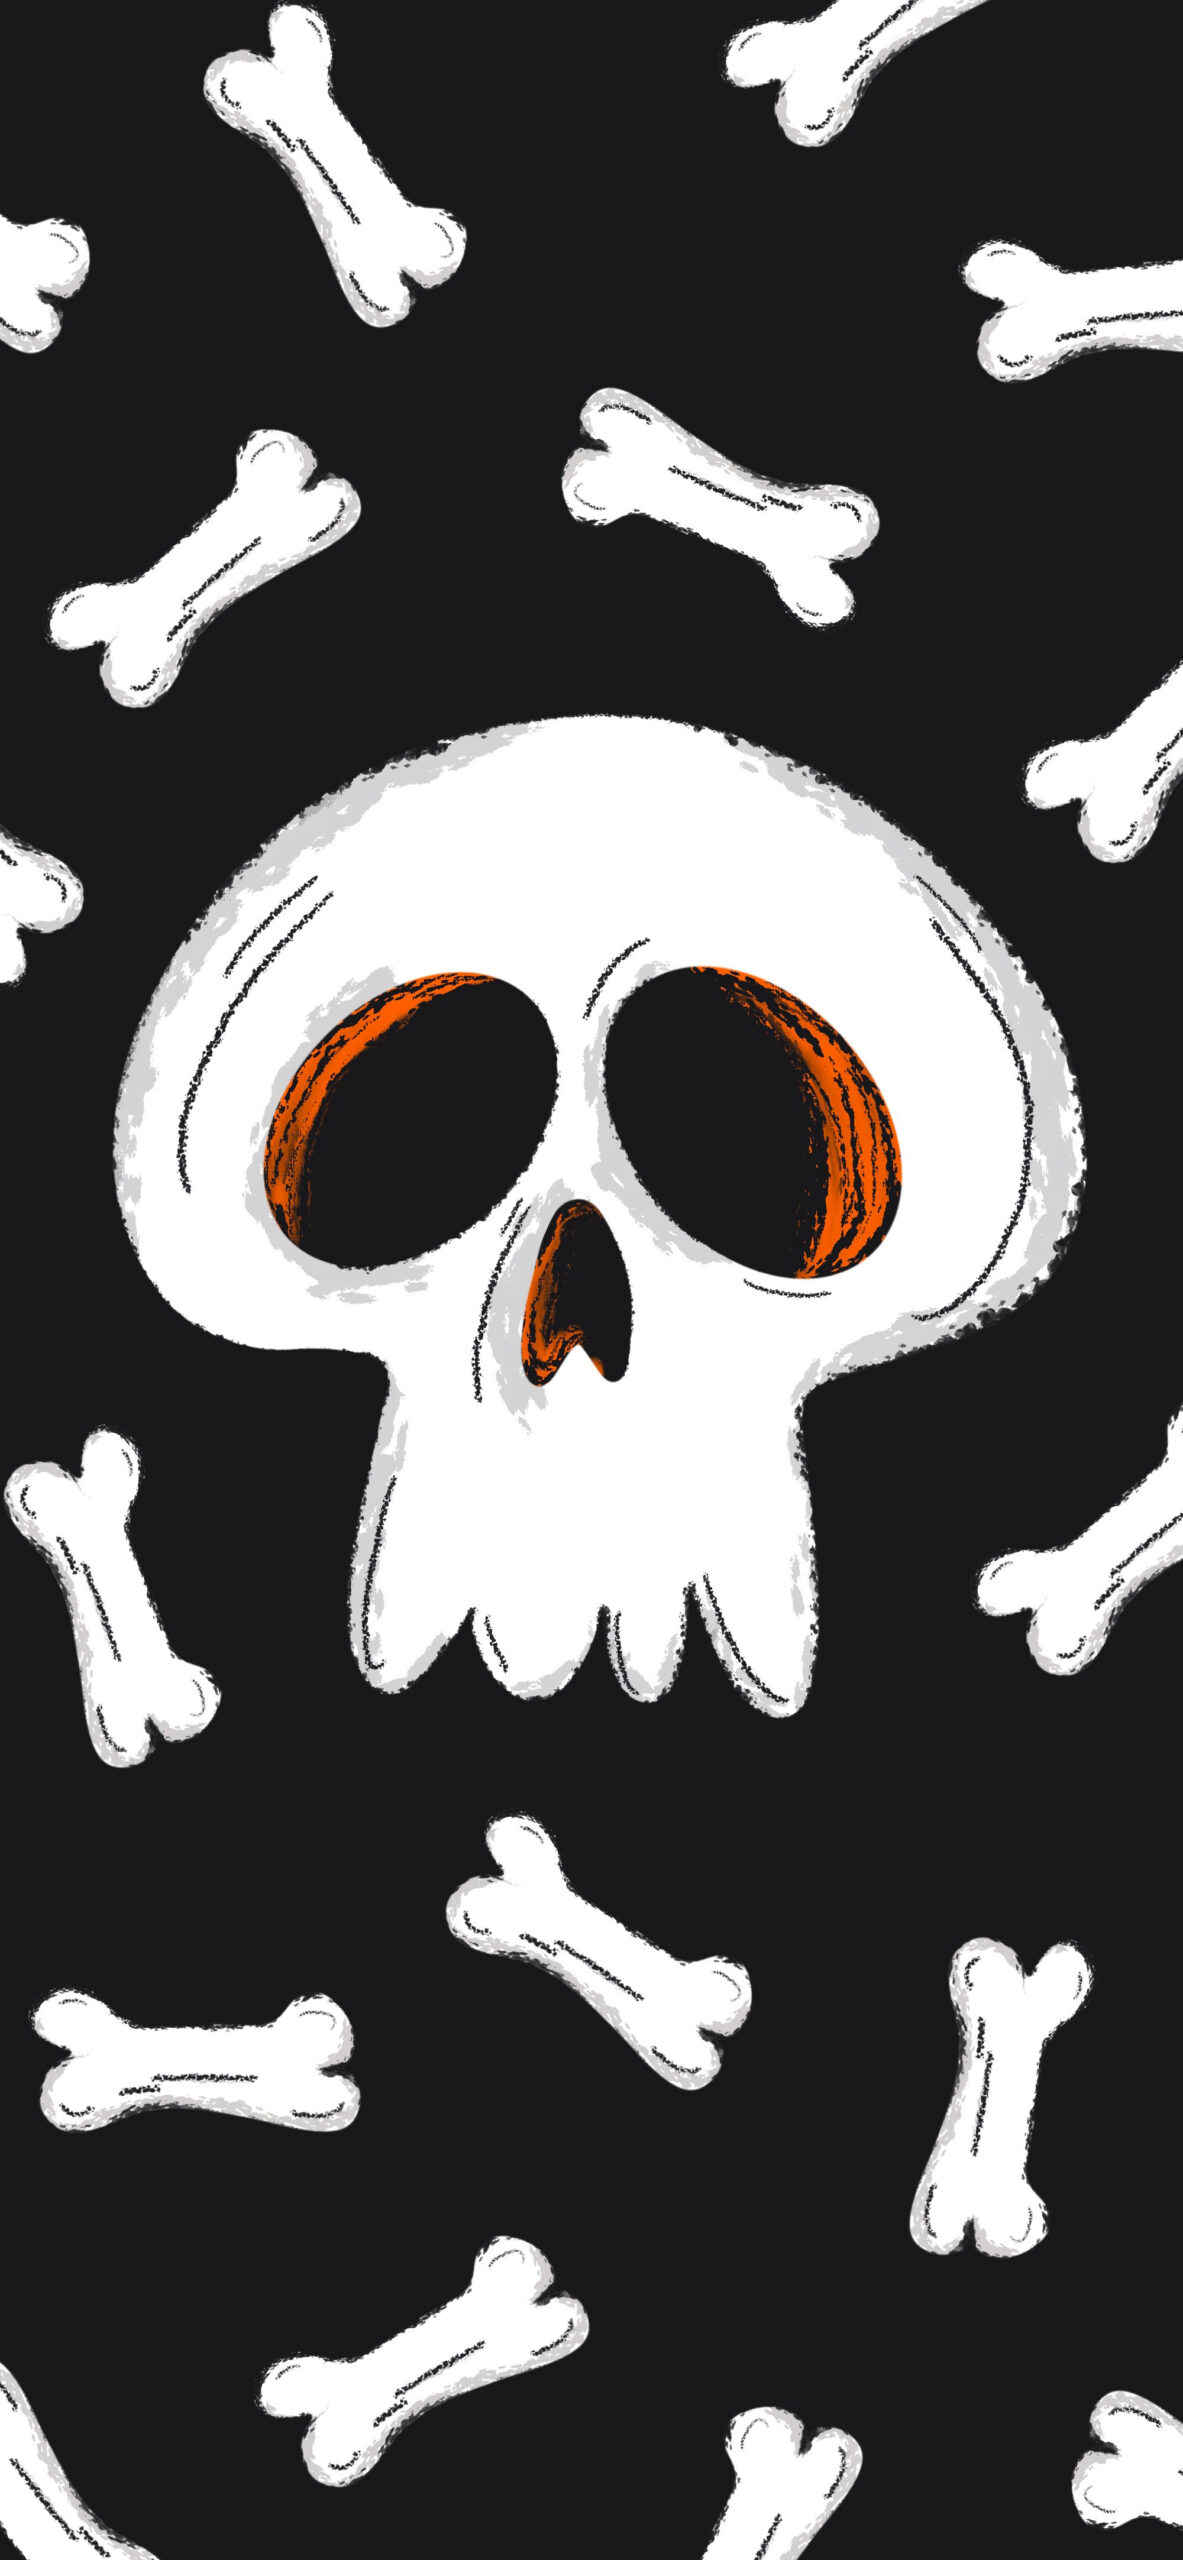 Skull and Bones Wallpapers